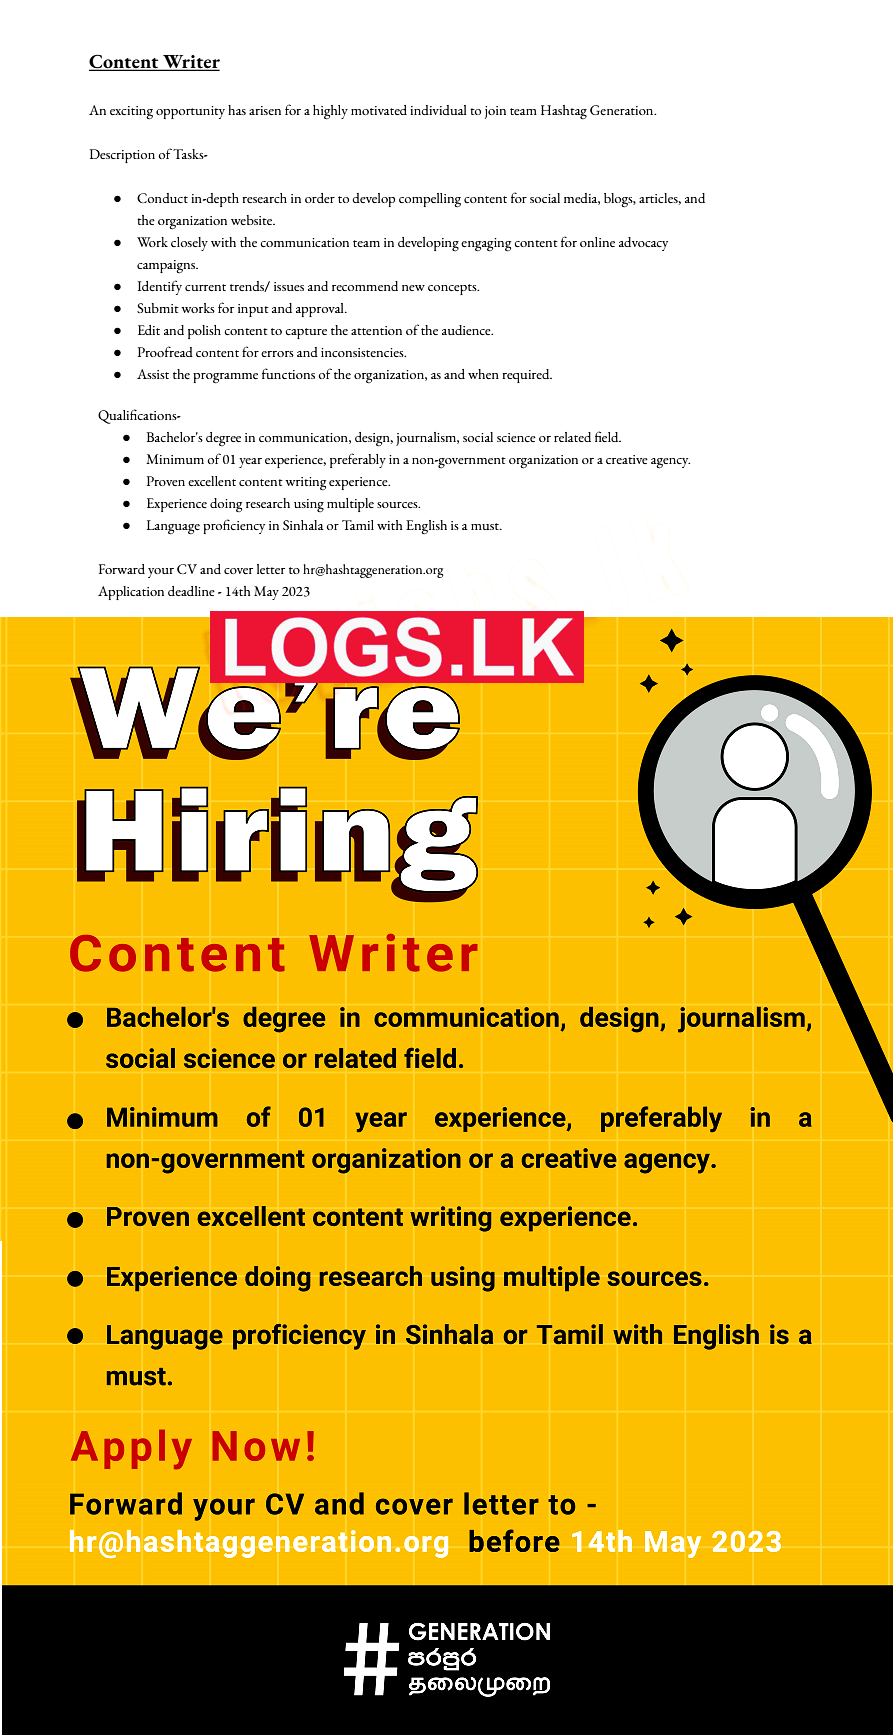 Content Writer Job Vacancy at Hashtag Generation Job Vacancies in Sri Lanka